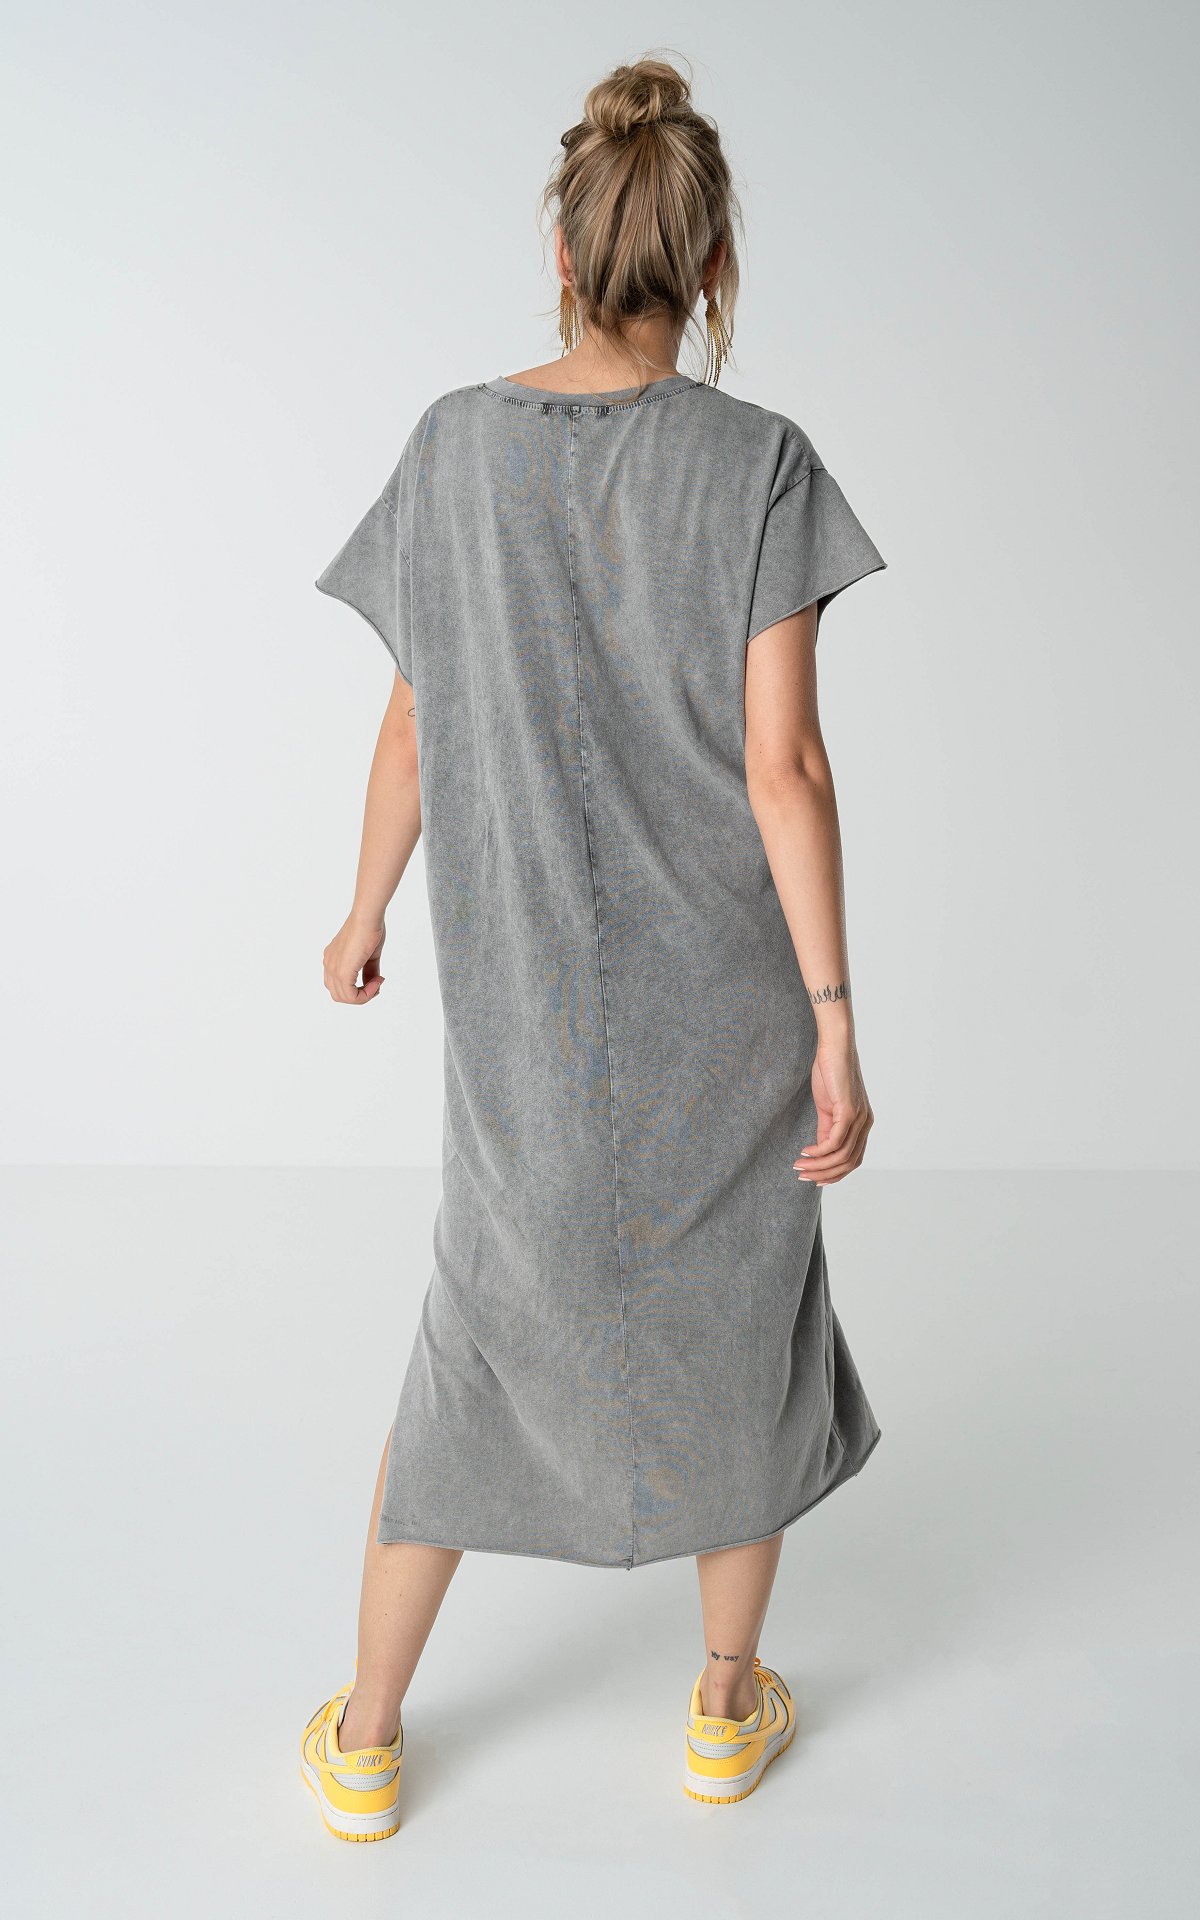 Bespreken zuurstof verstoring Lange t-shirt jurk - Grijs | Guts & Gusto | GUTSGUSTO.COM